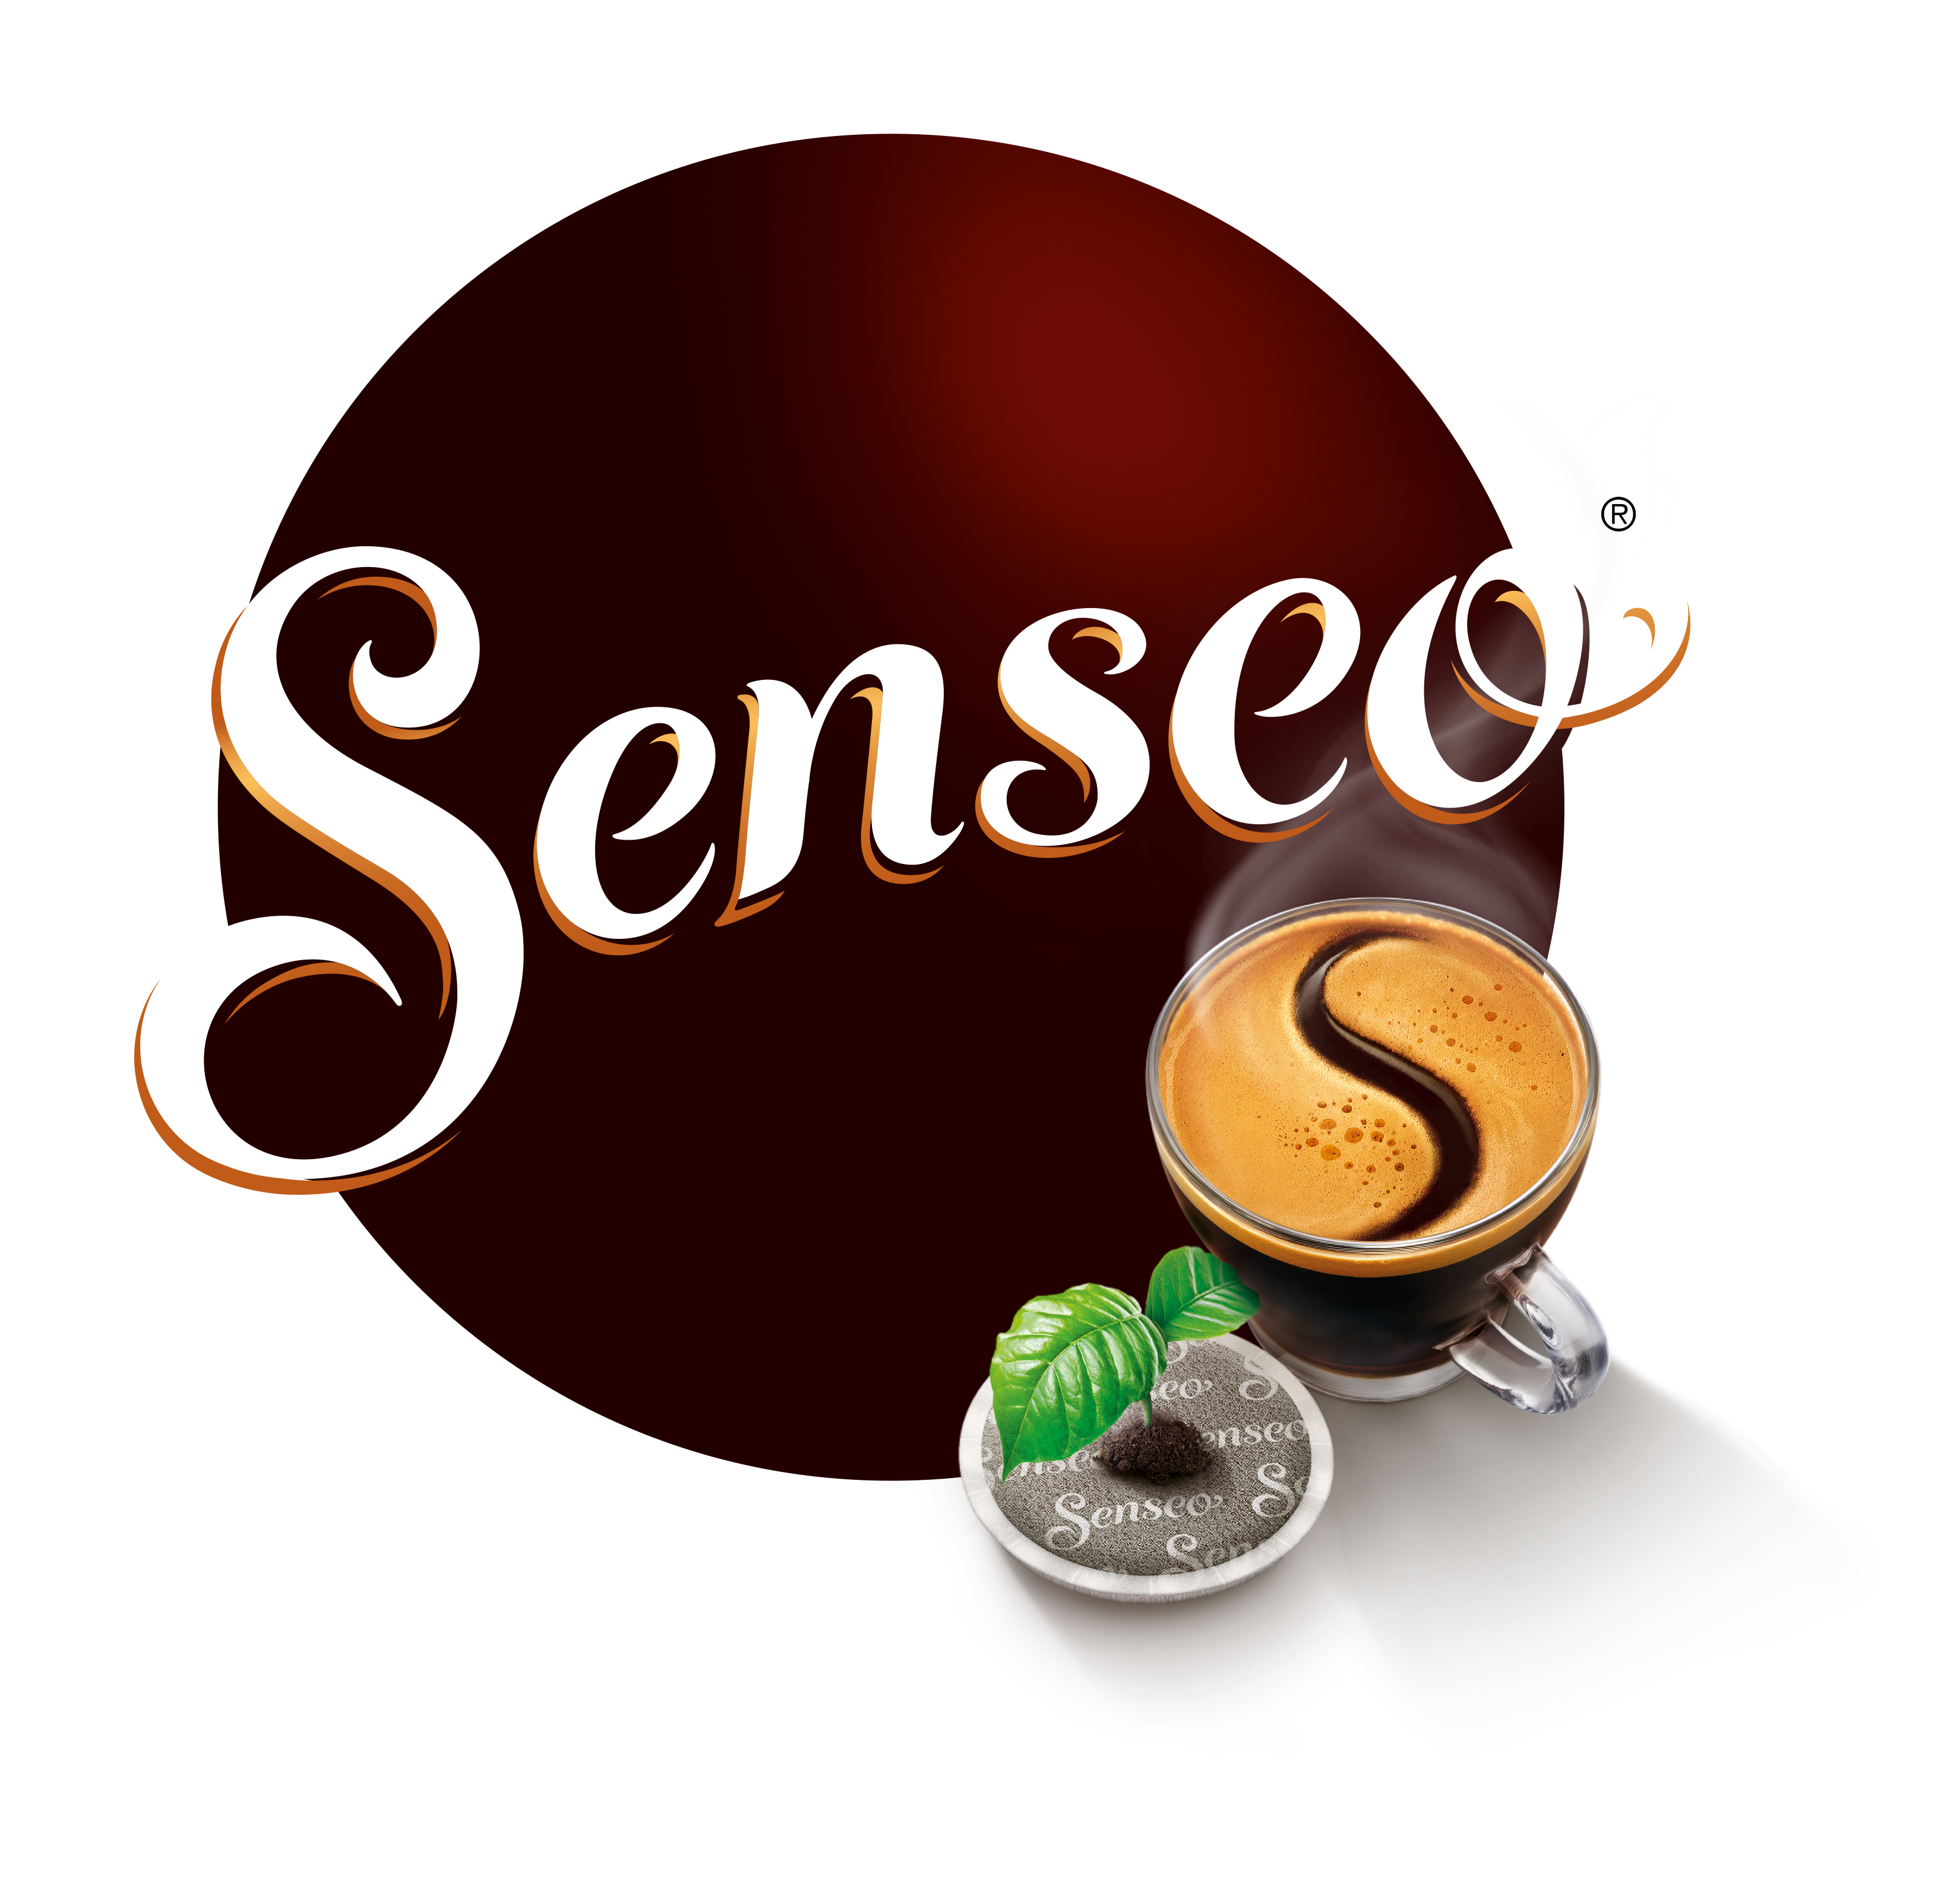 Senseo - Wikipedia, la enciclopedia libre